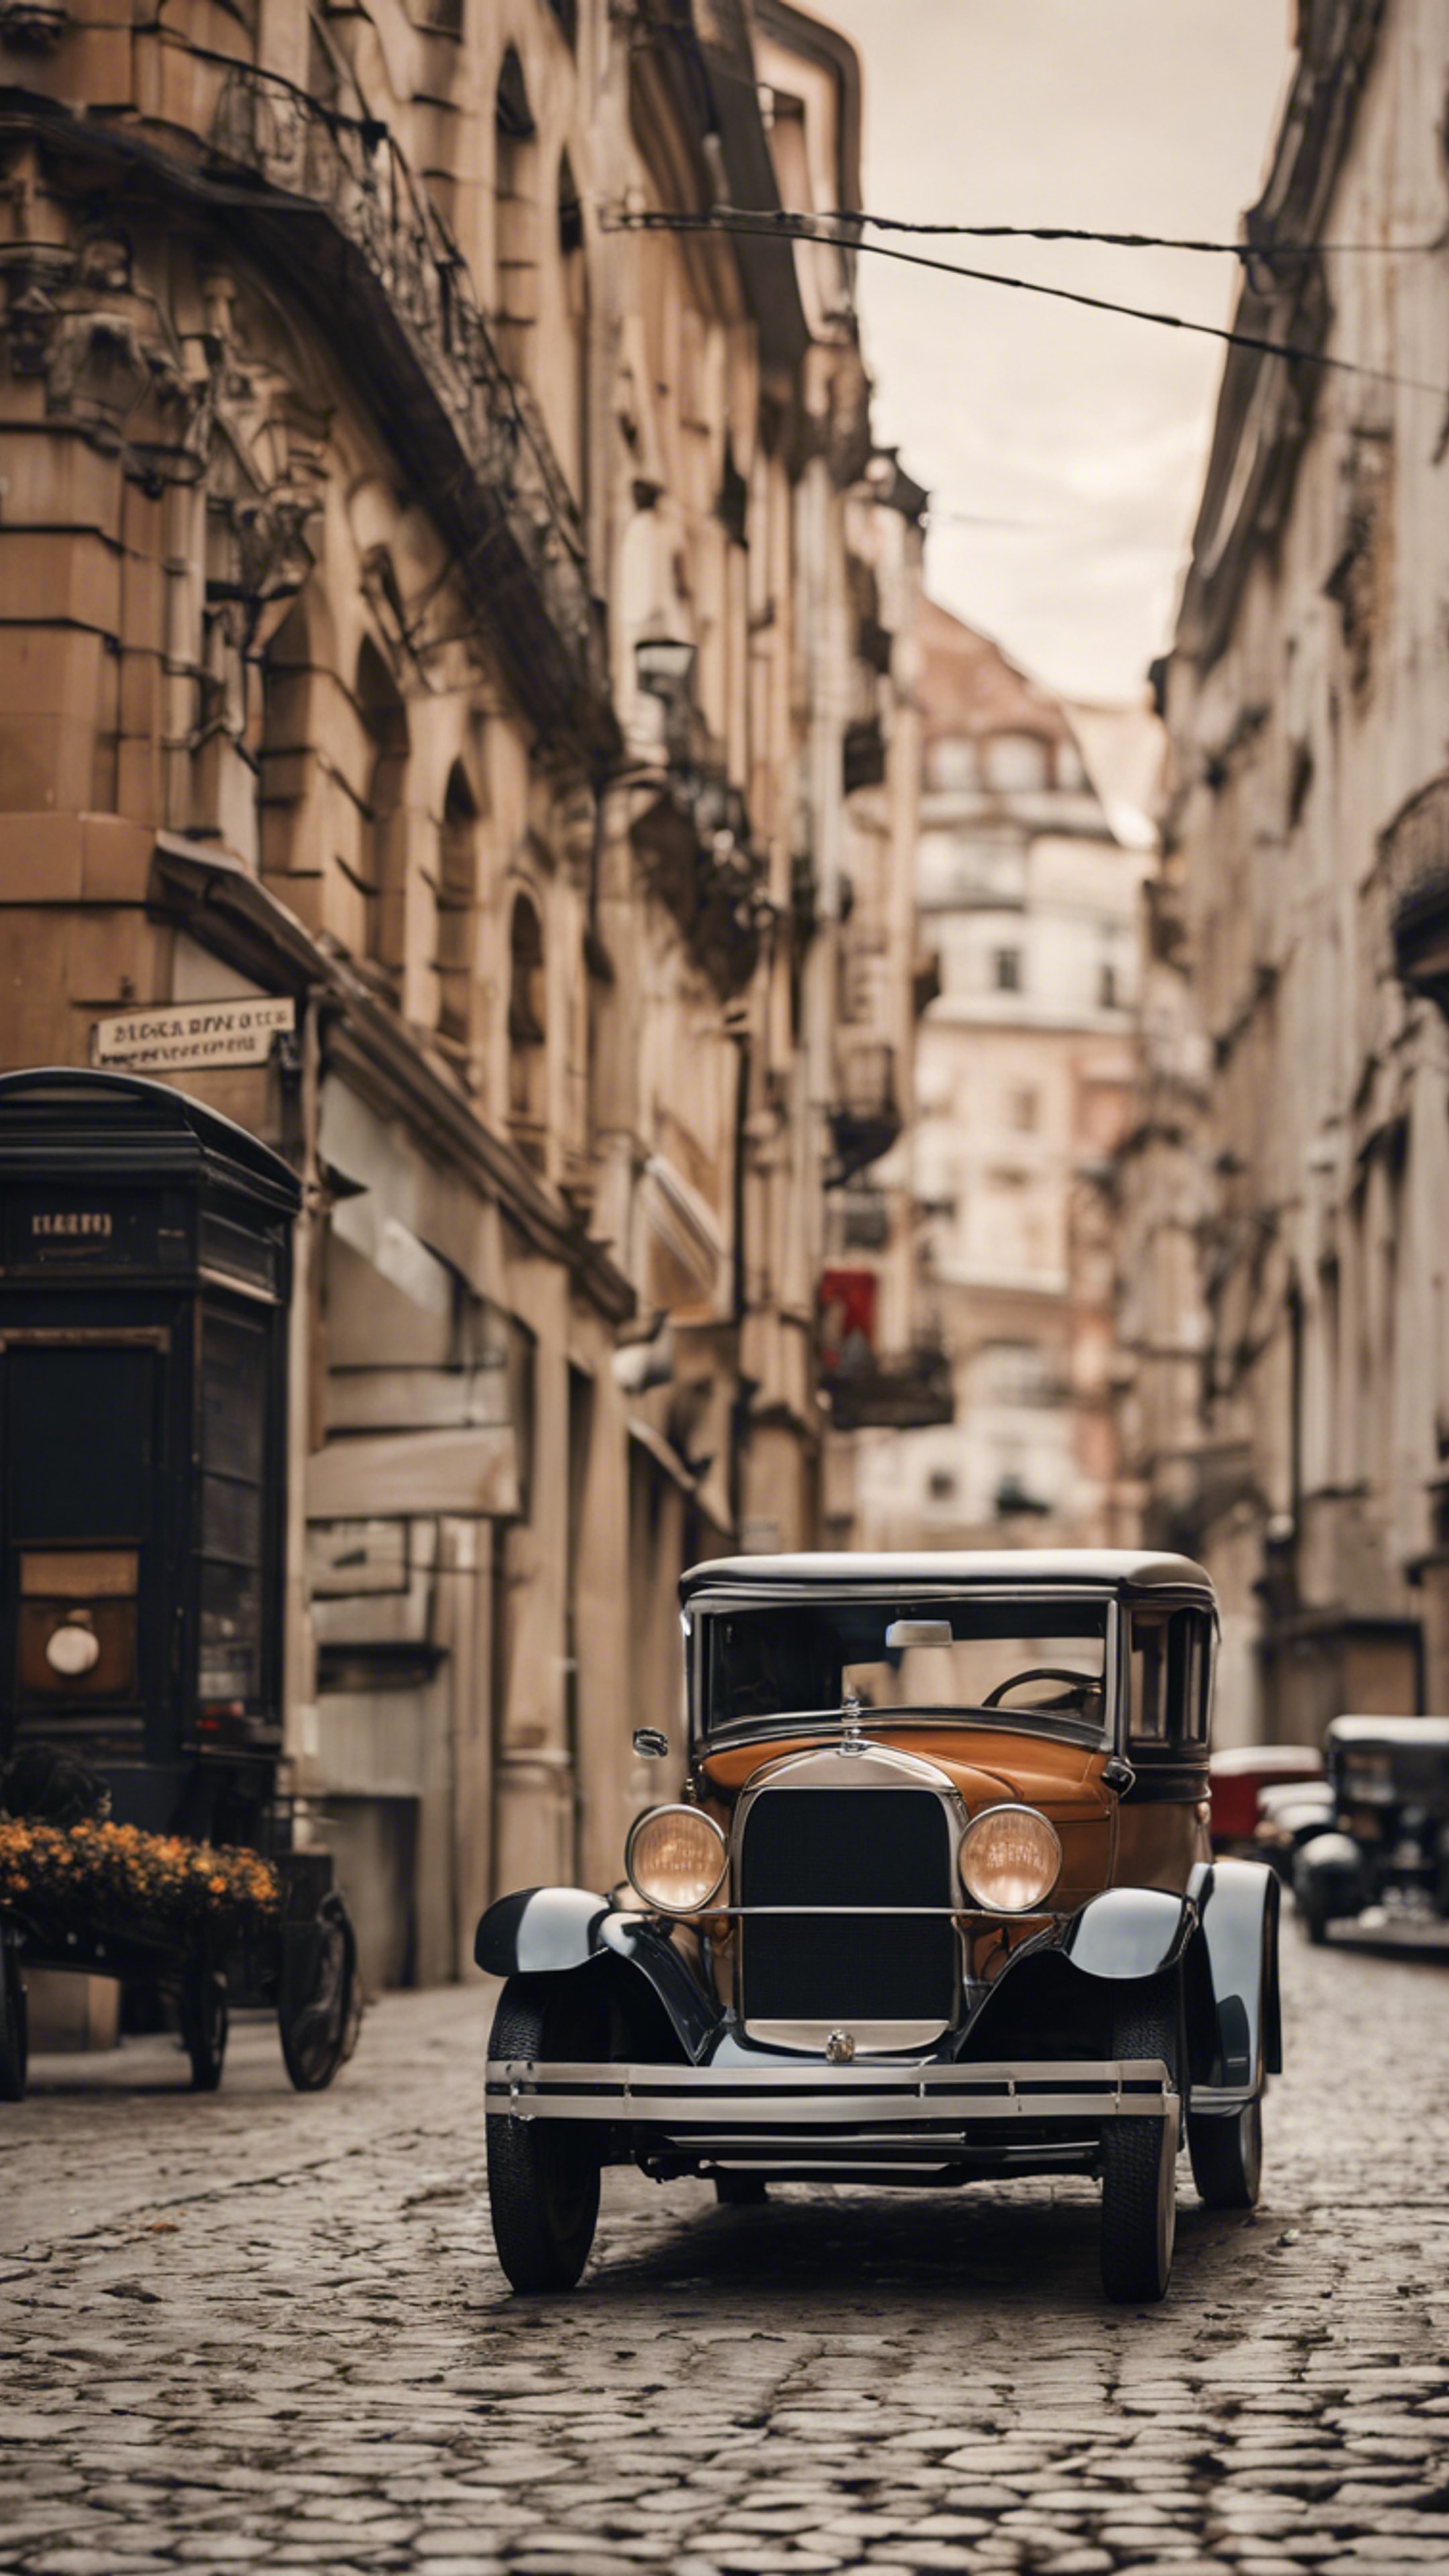 A nostalgic cityscape in the 1920s with classic cars and cobblestone streets. ផ្ទាំង​រូបភាព[d252acda6f644acf85b4]